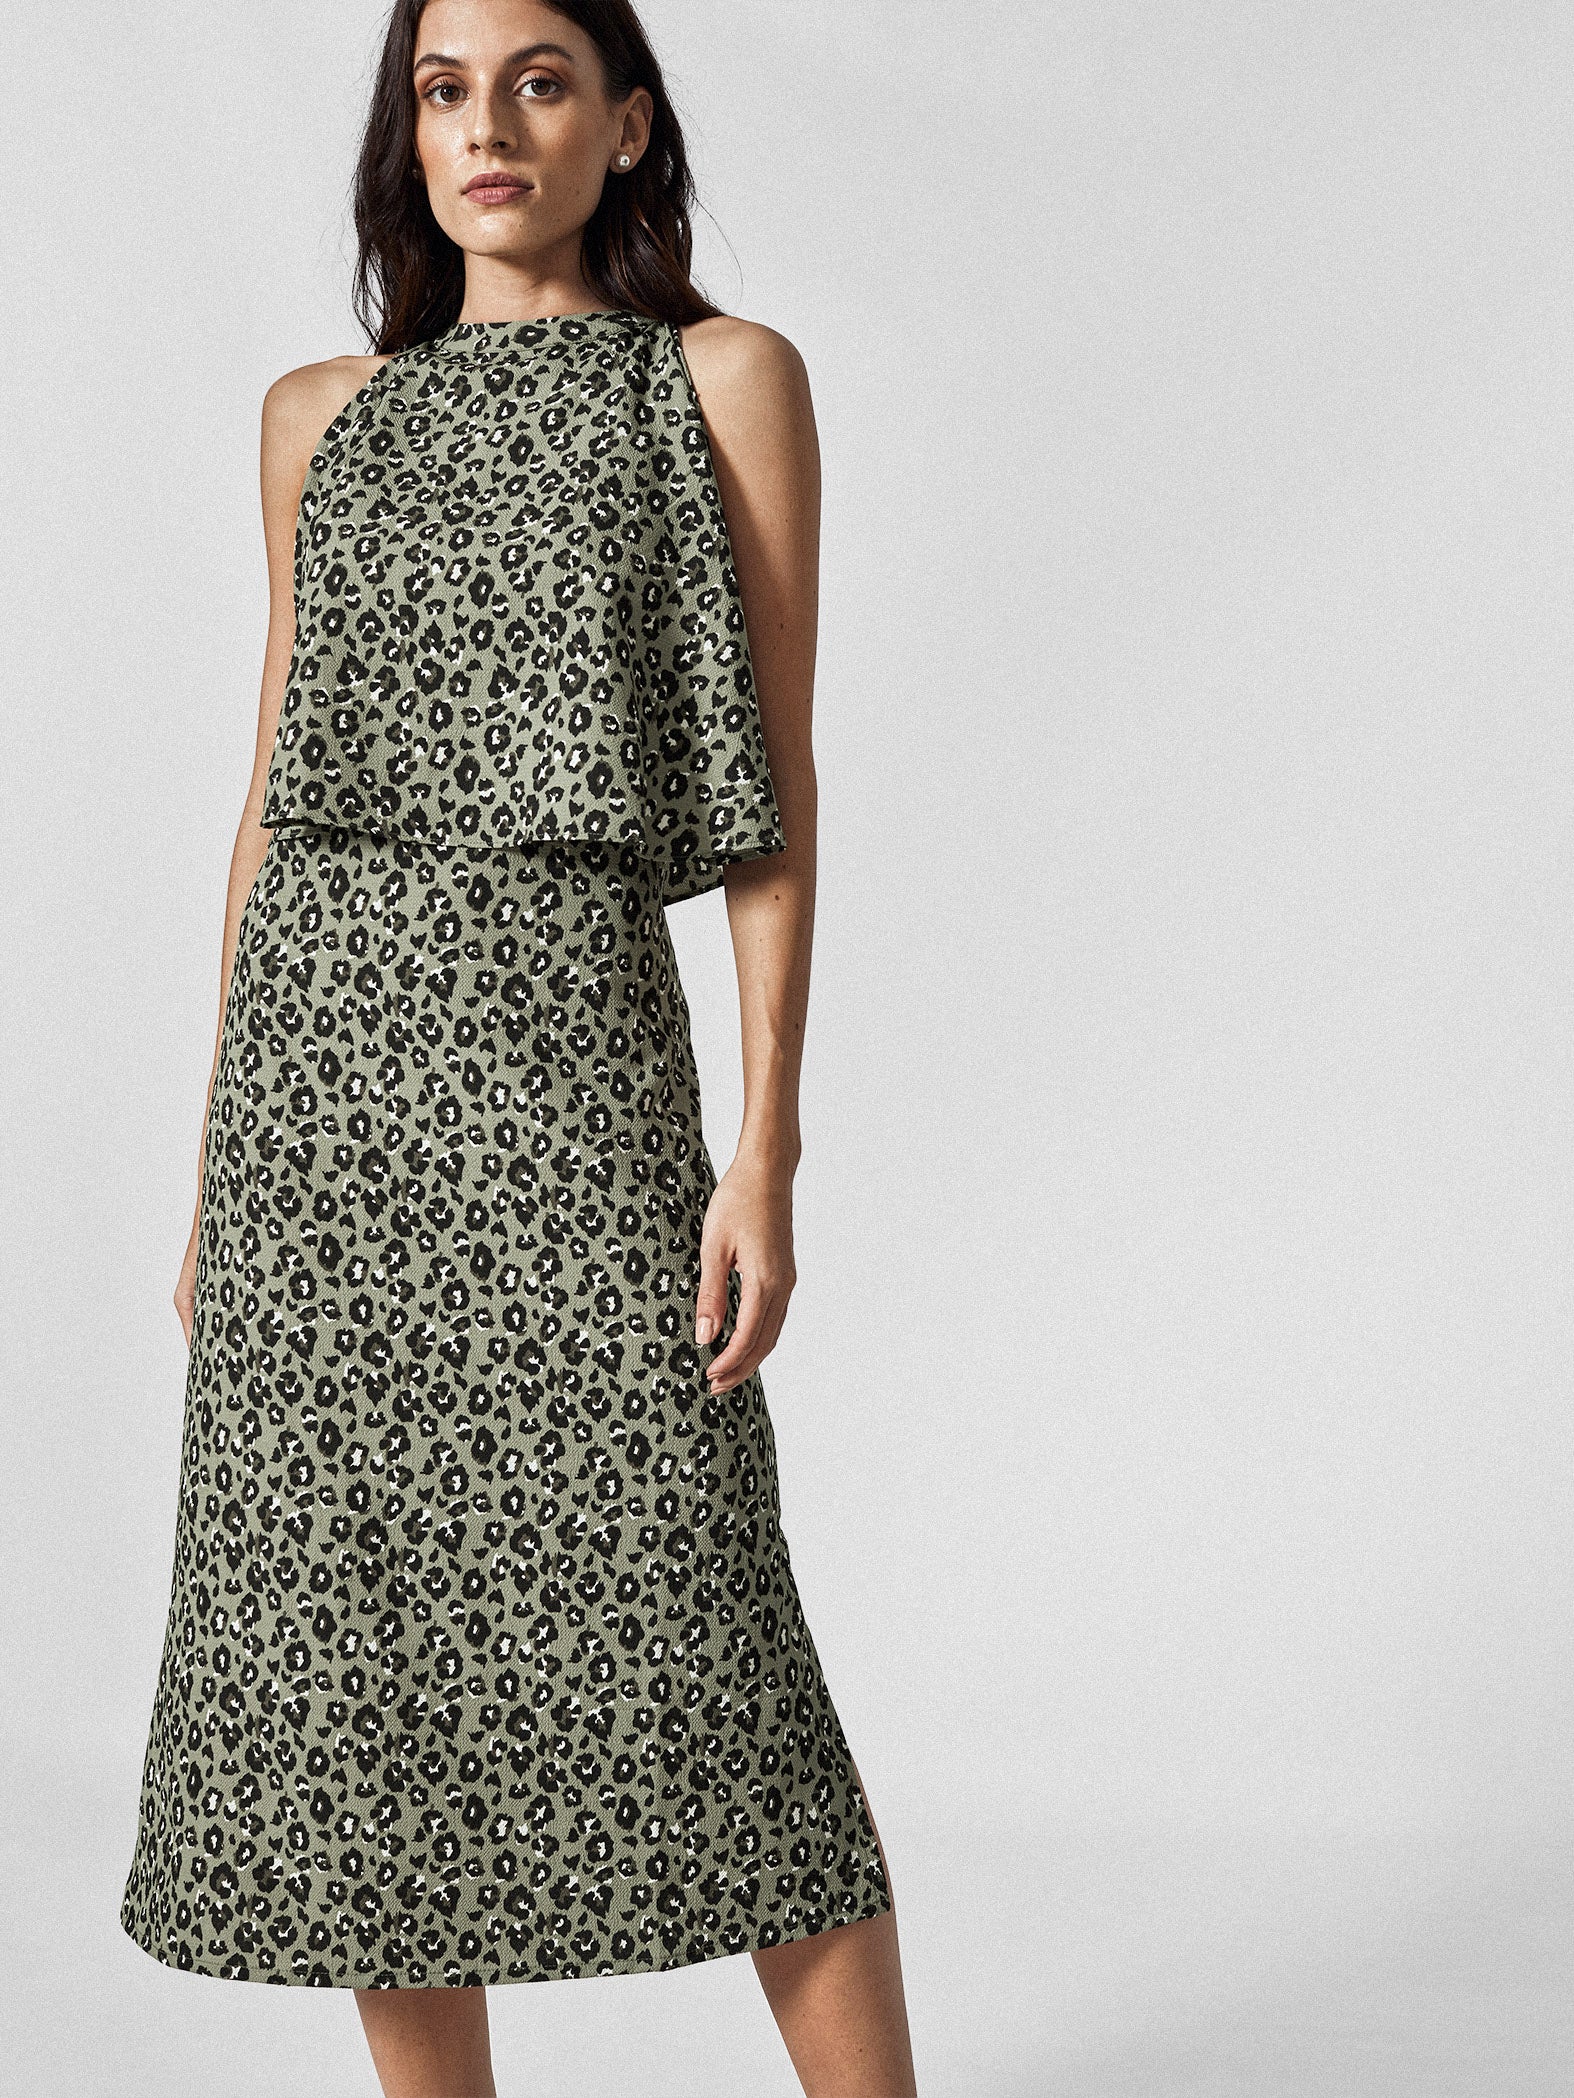 Olive Leopard Overlay Dress